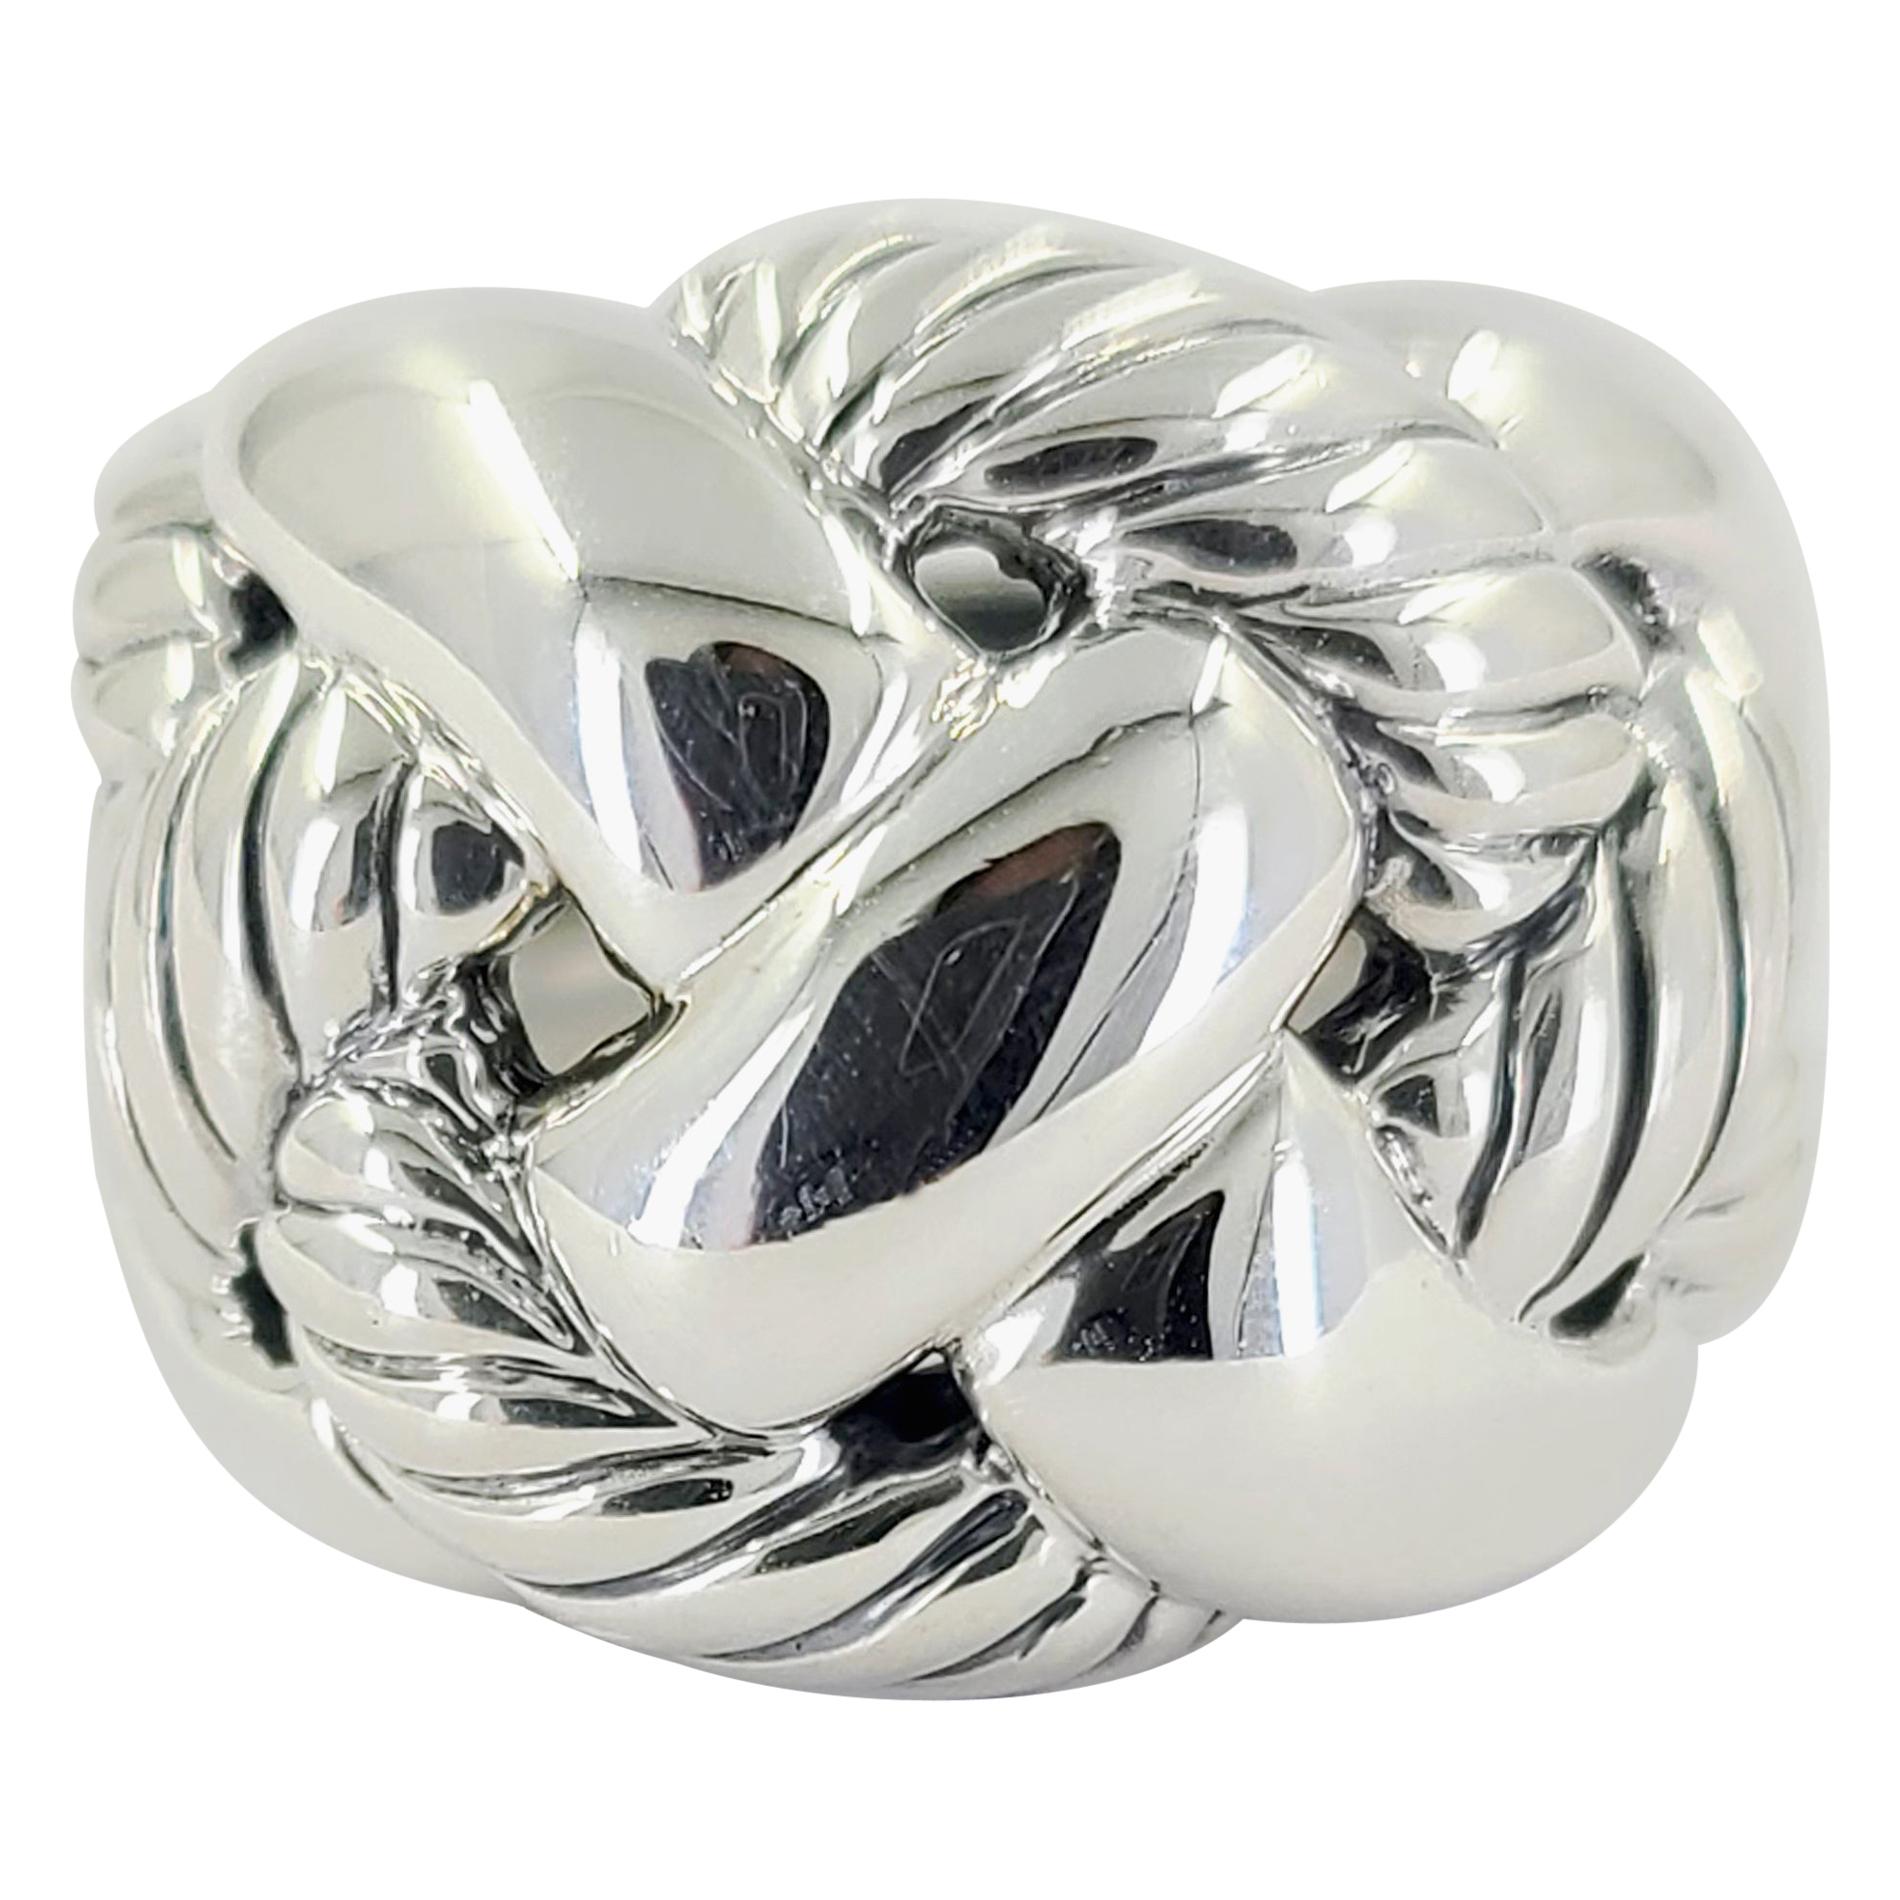 David Yurman Sterling Silver Woven Dome Ring